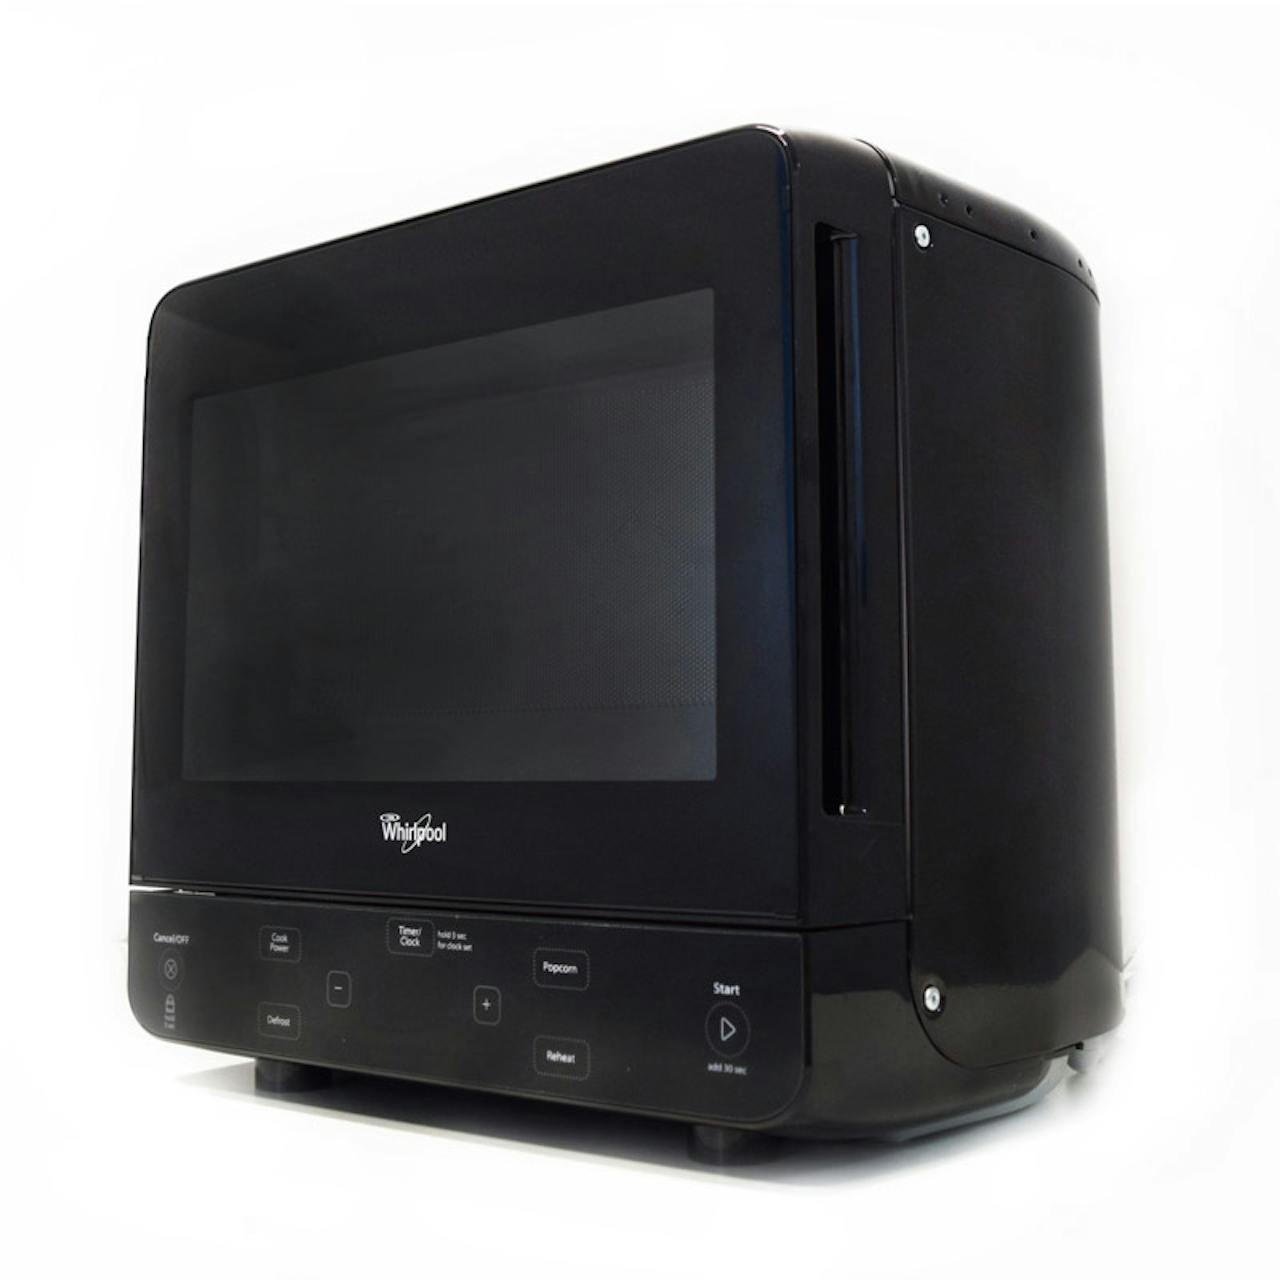 Whirlpool 0.5-cu ft 750-Watt Countertop Microwave (Silver) in the